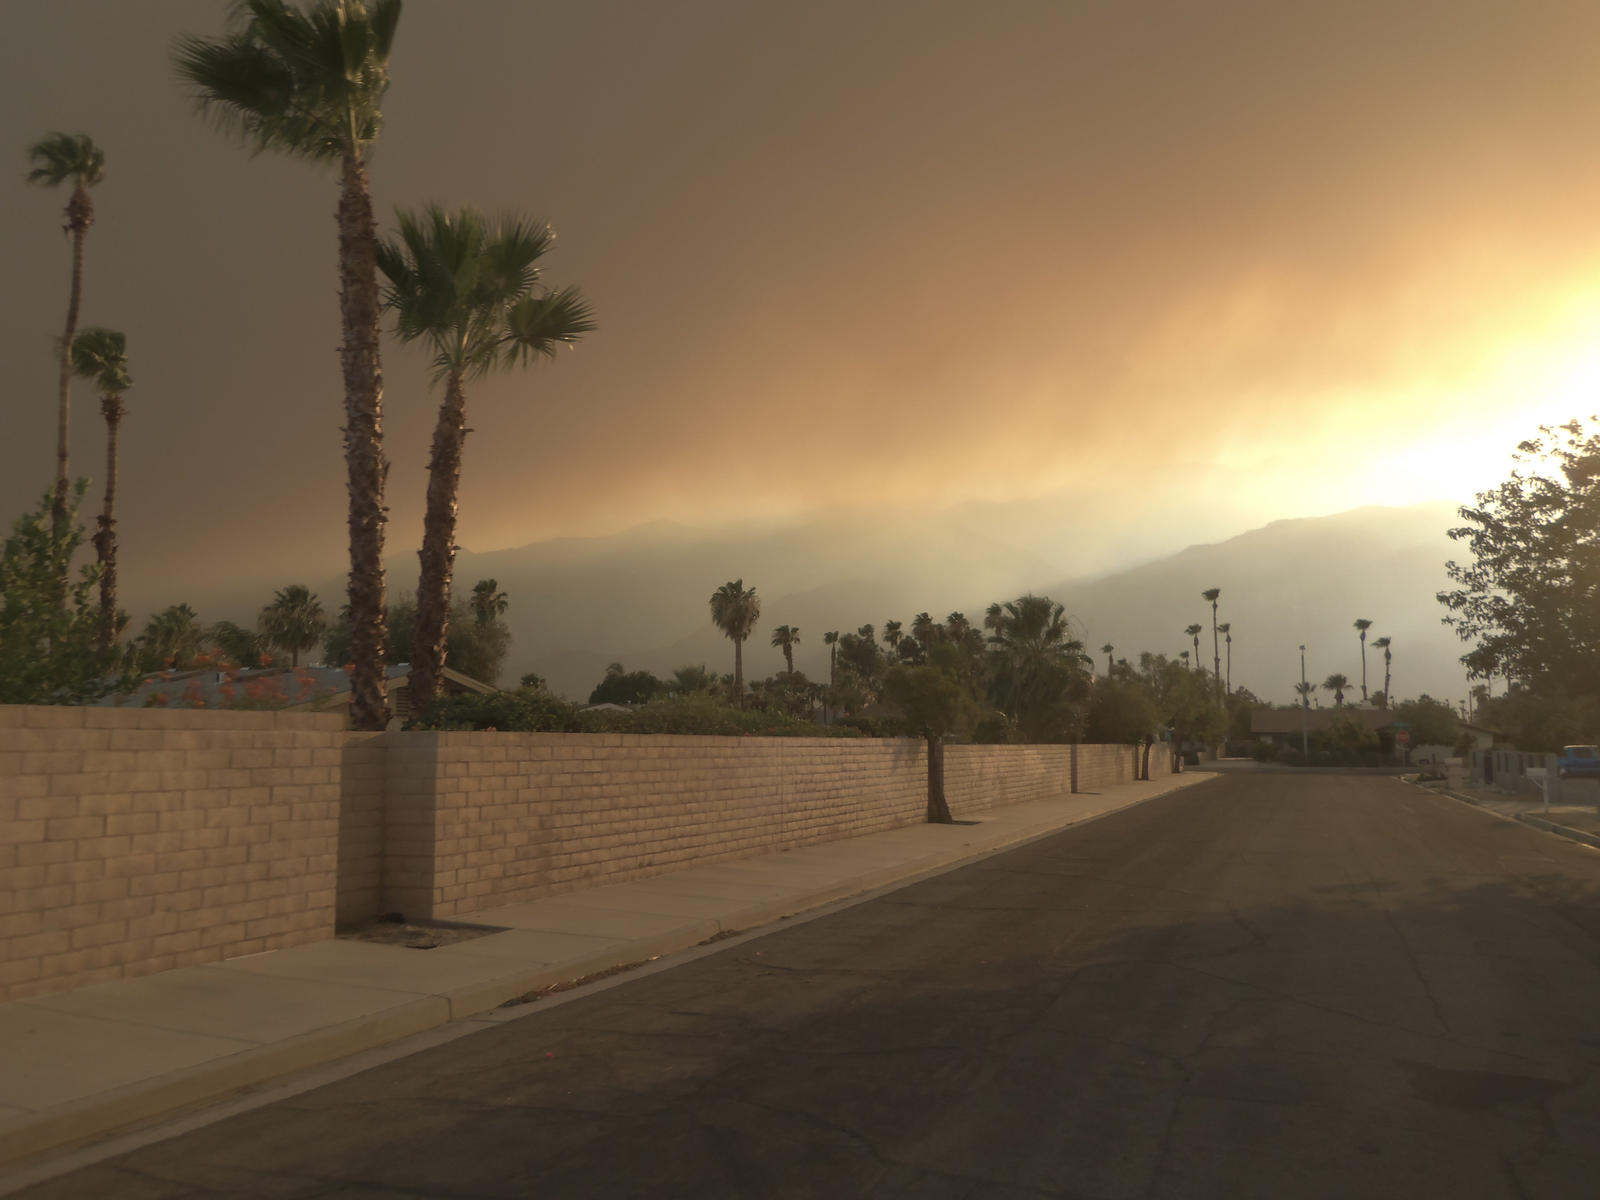 Mt San Jacinto Burning (Palm Springs)